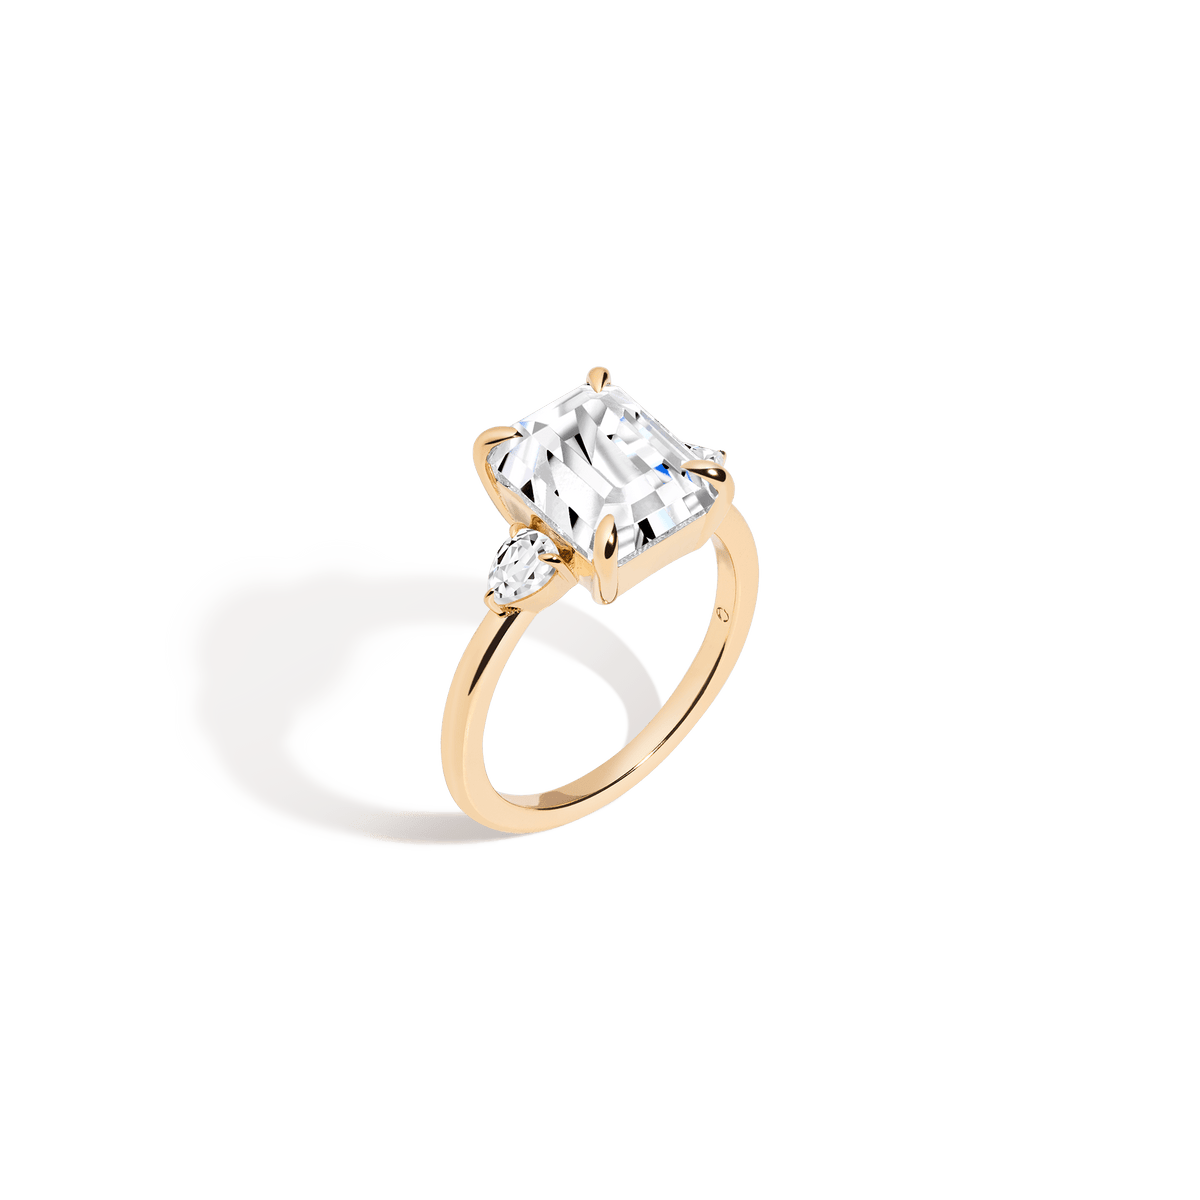 Emerald Gemstone Cocktail Ring